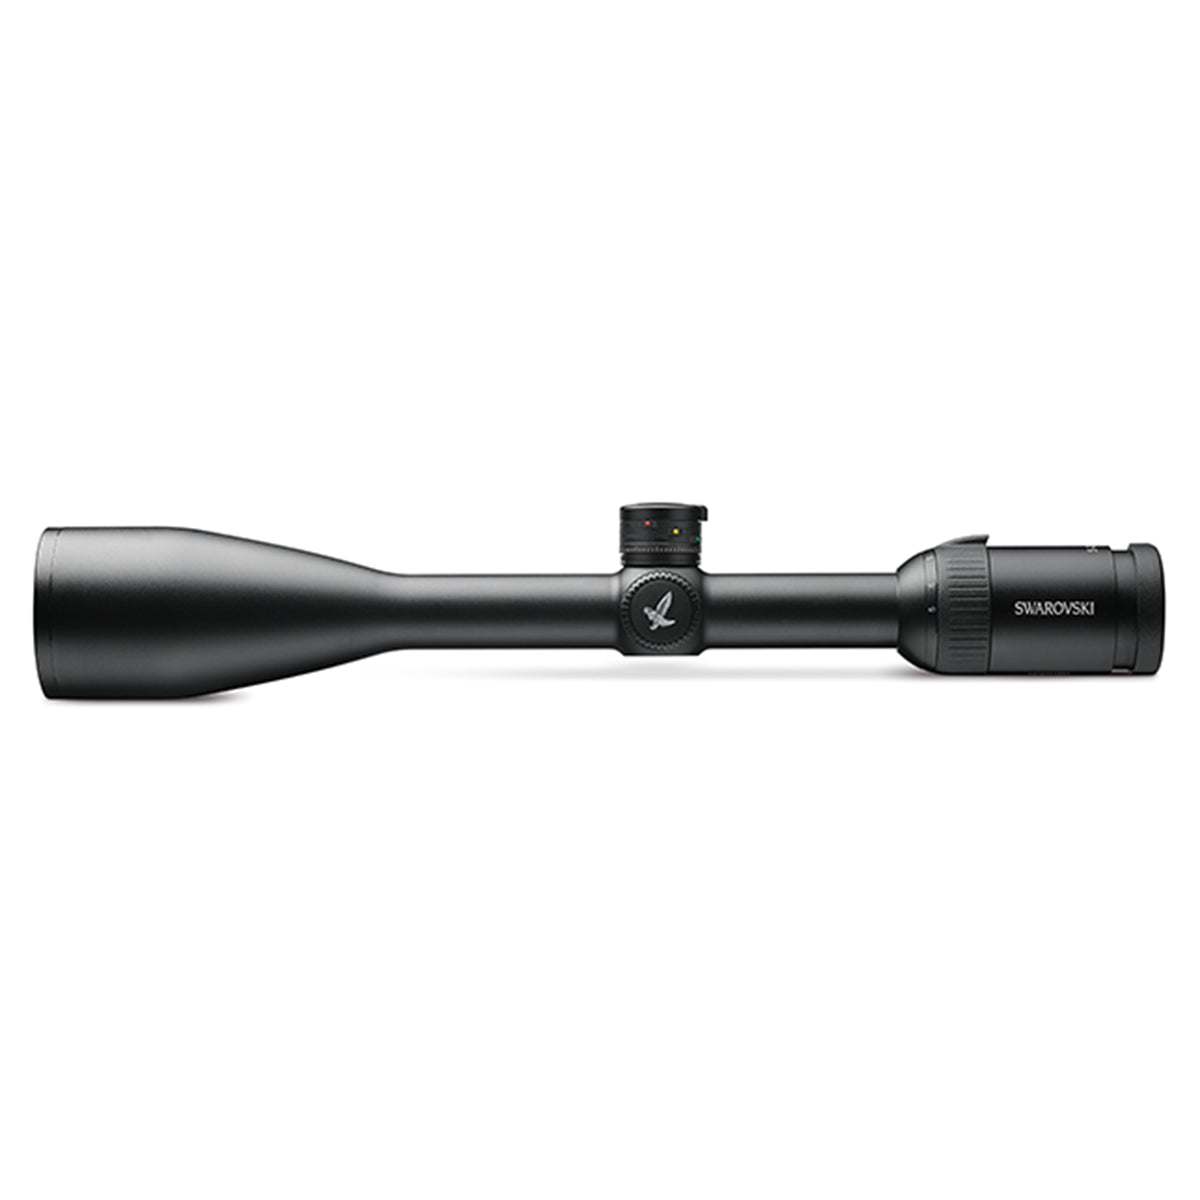 Swarovski Z5 5-25x52 P BT L Riflescope in Swarovski Z5 5-25x52 P BT L Riflescope by Swarovski Optik | Optics - goHUNT Shop by GOHUNT | Swarovski Optik - GOHUNT Shop